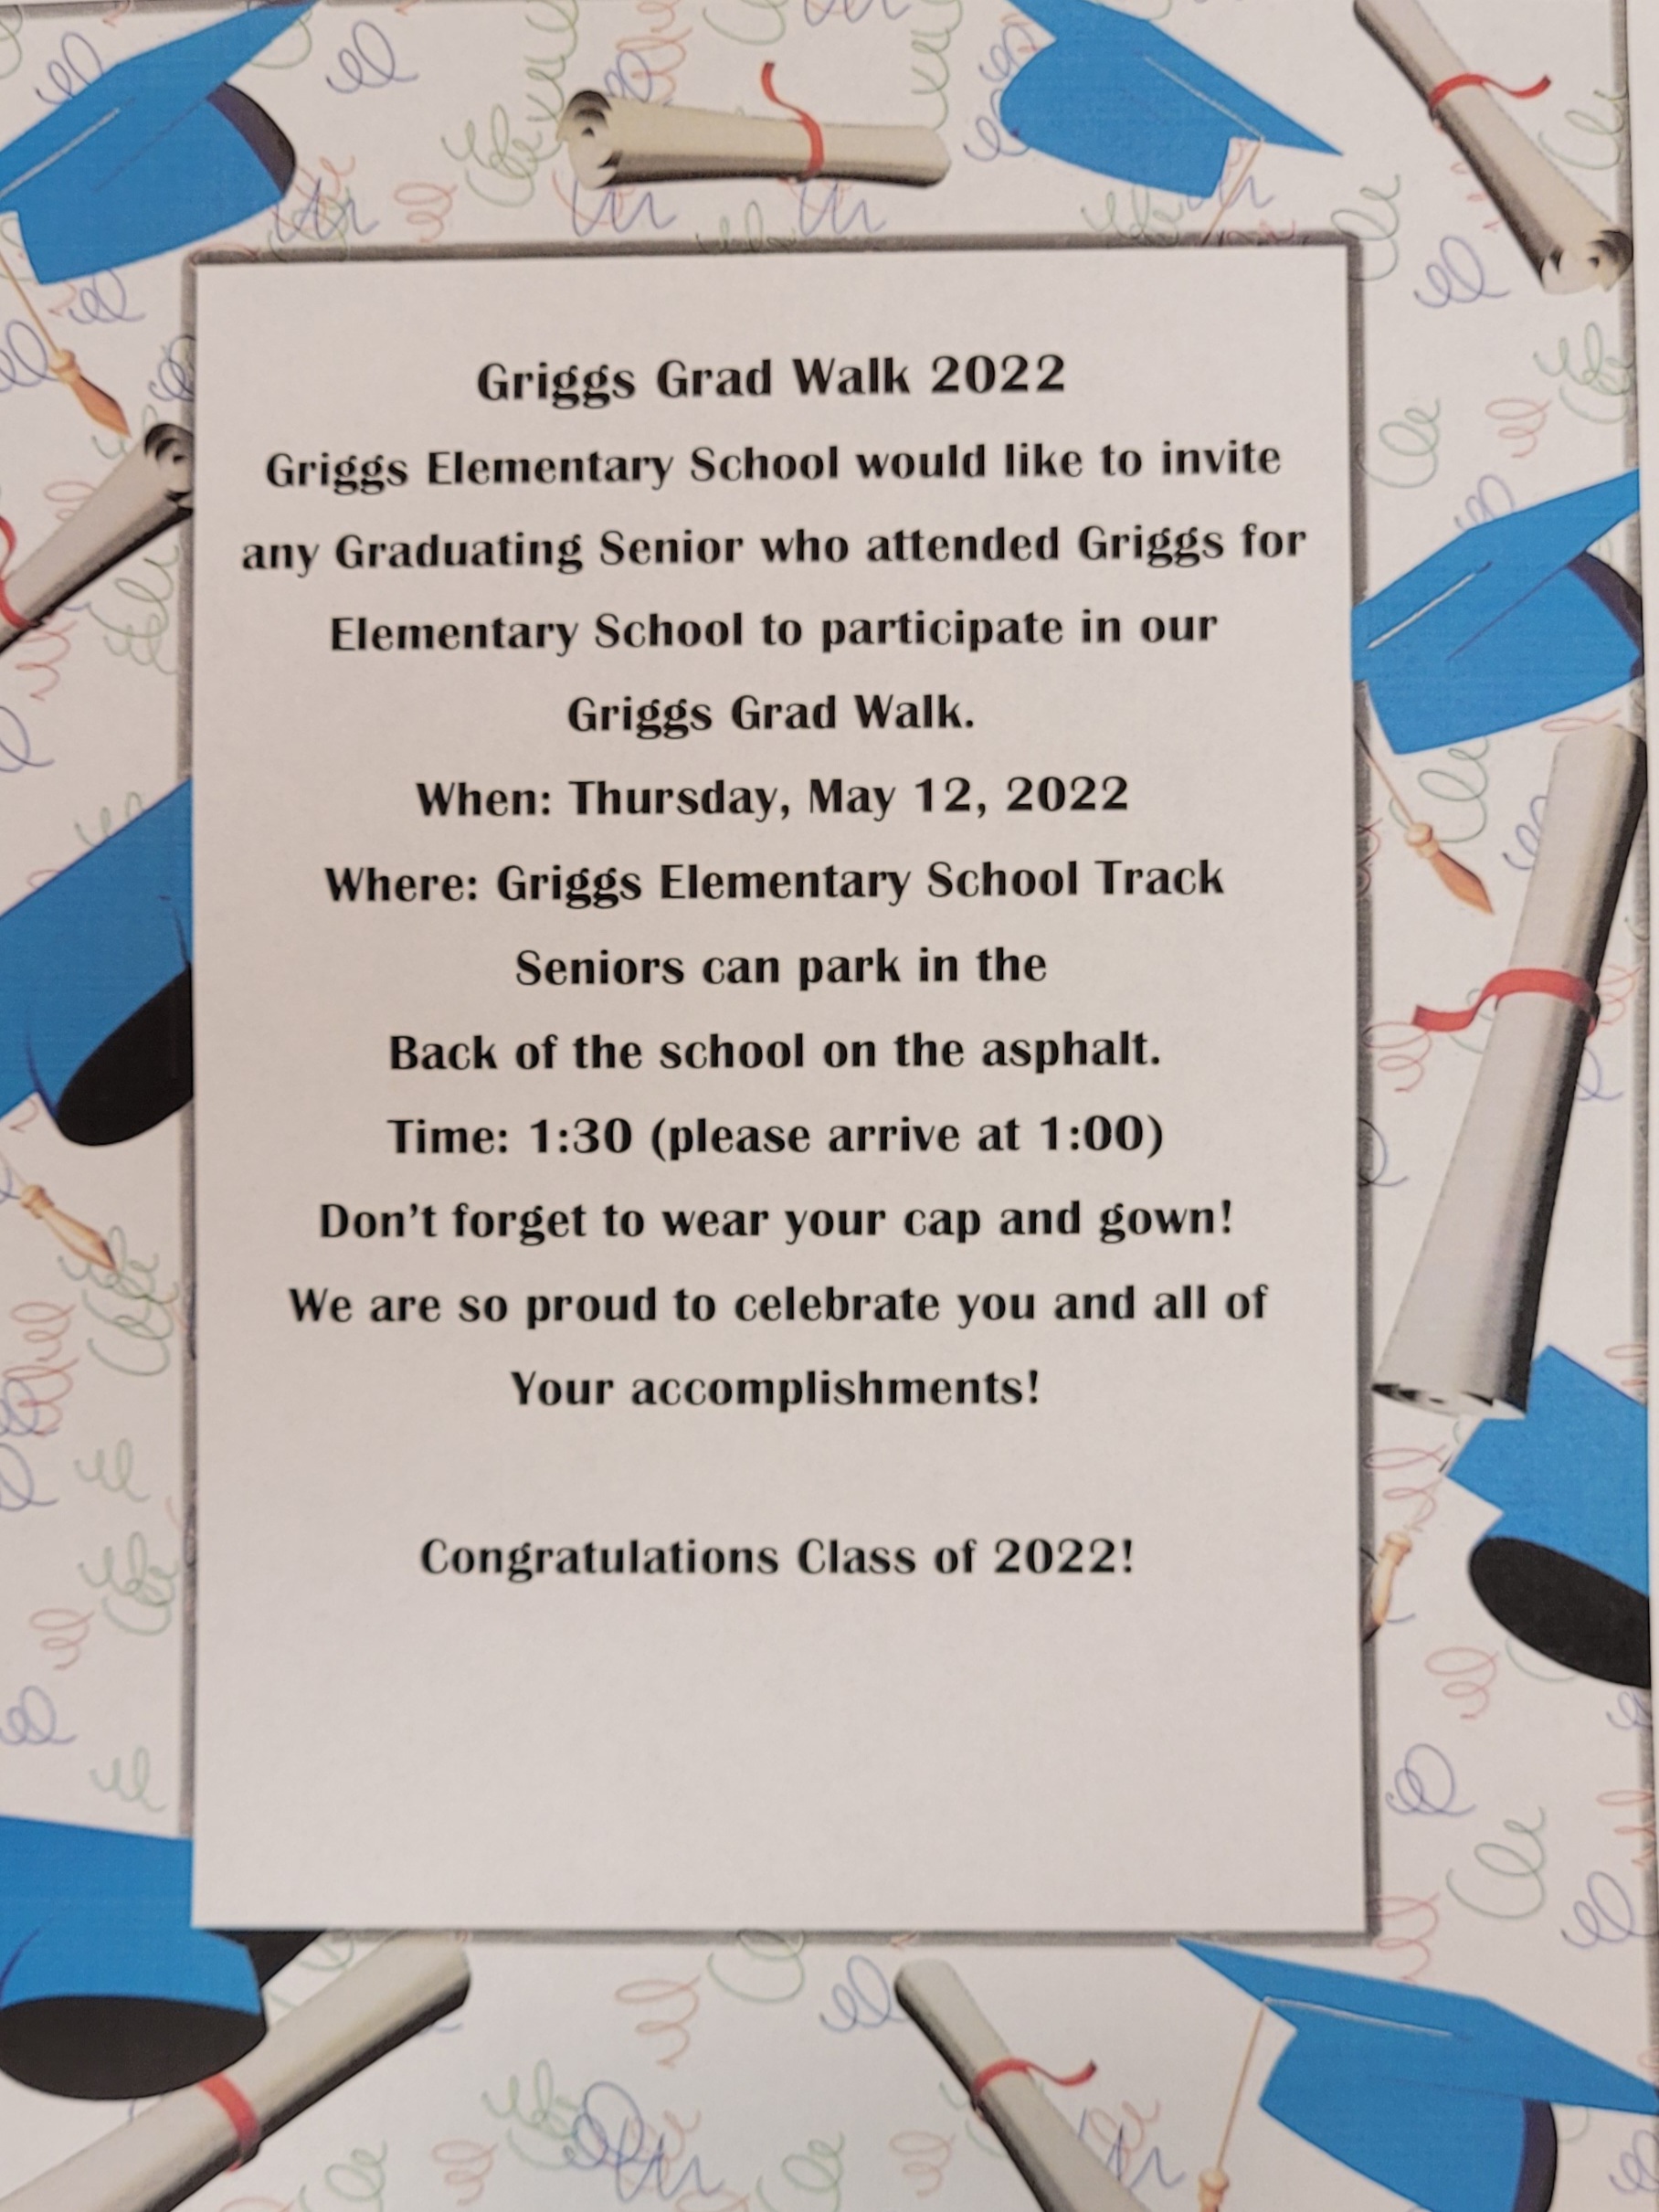 Flyer with information concerning Griggs Grad Walk.